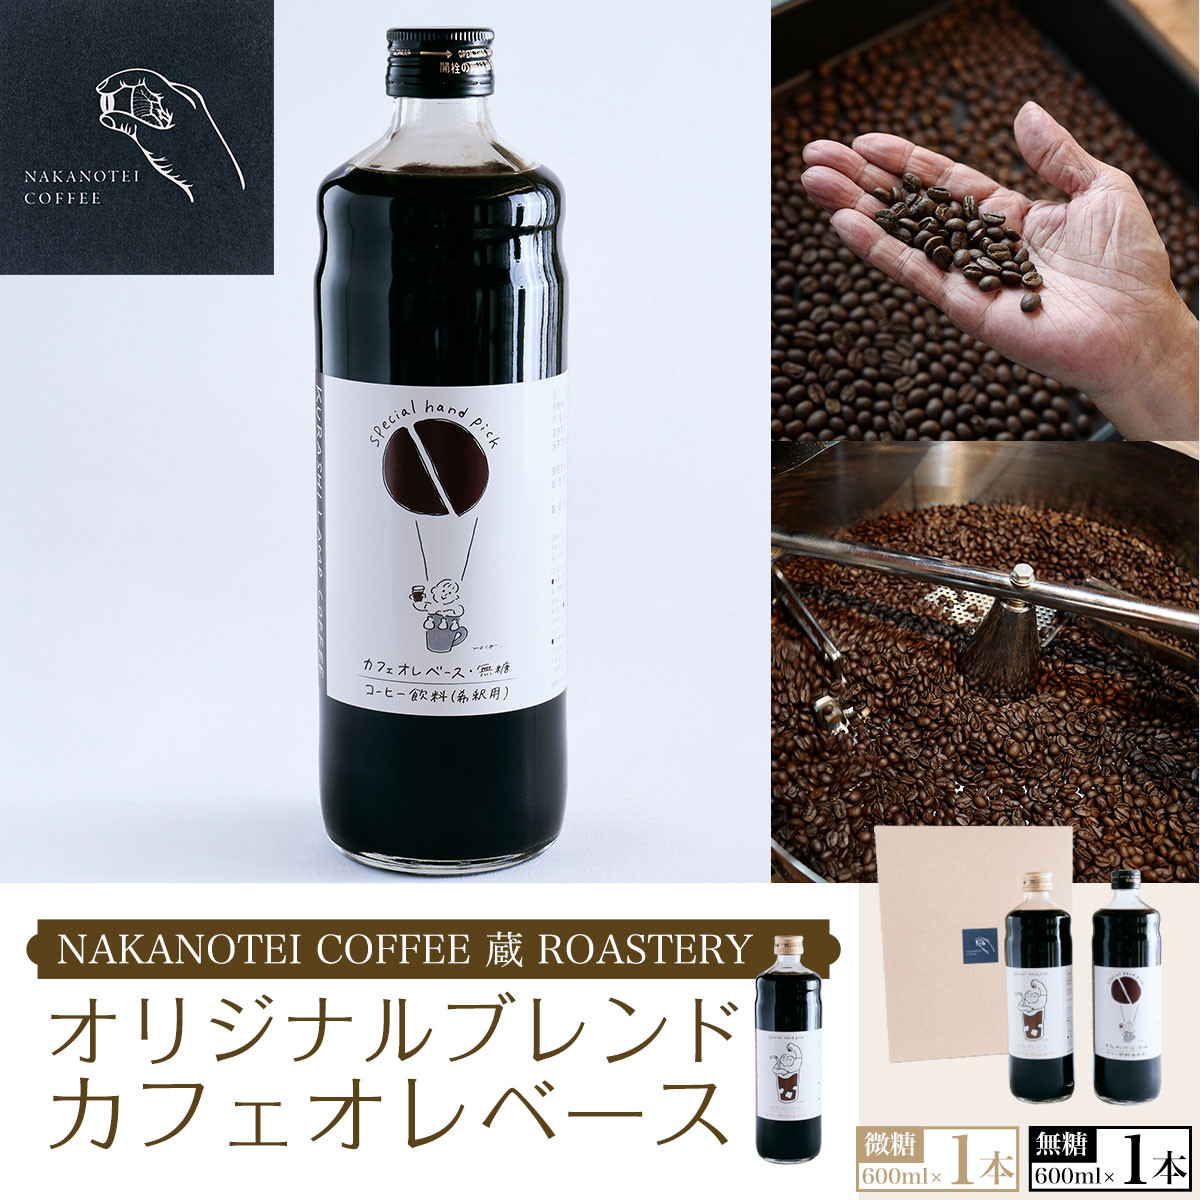 NAKANOTEI COFFEE 蔵 ROASTERY オリジナルブレンドカフェオレベース